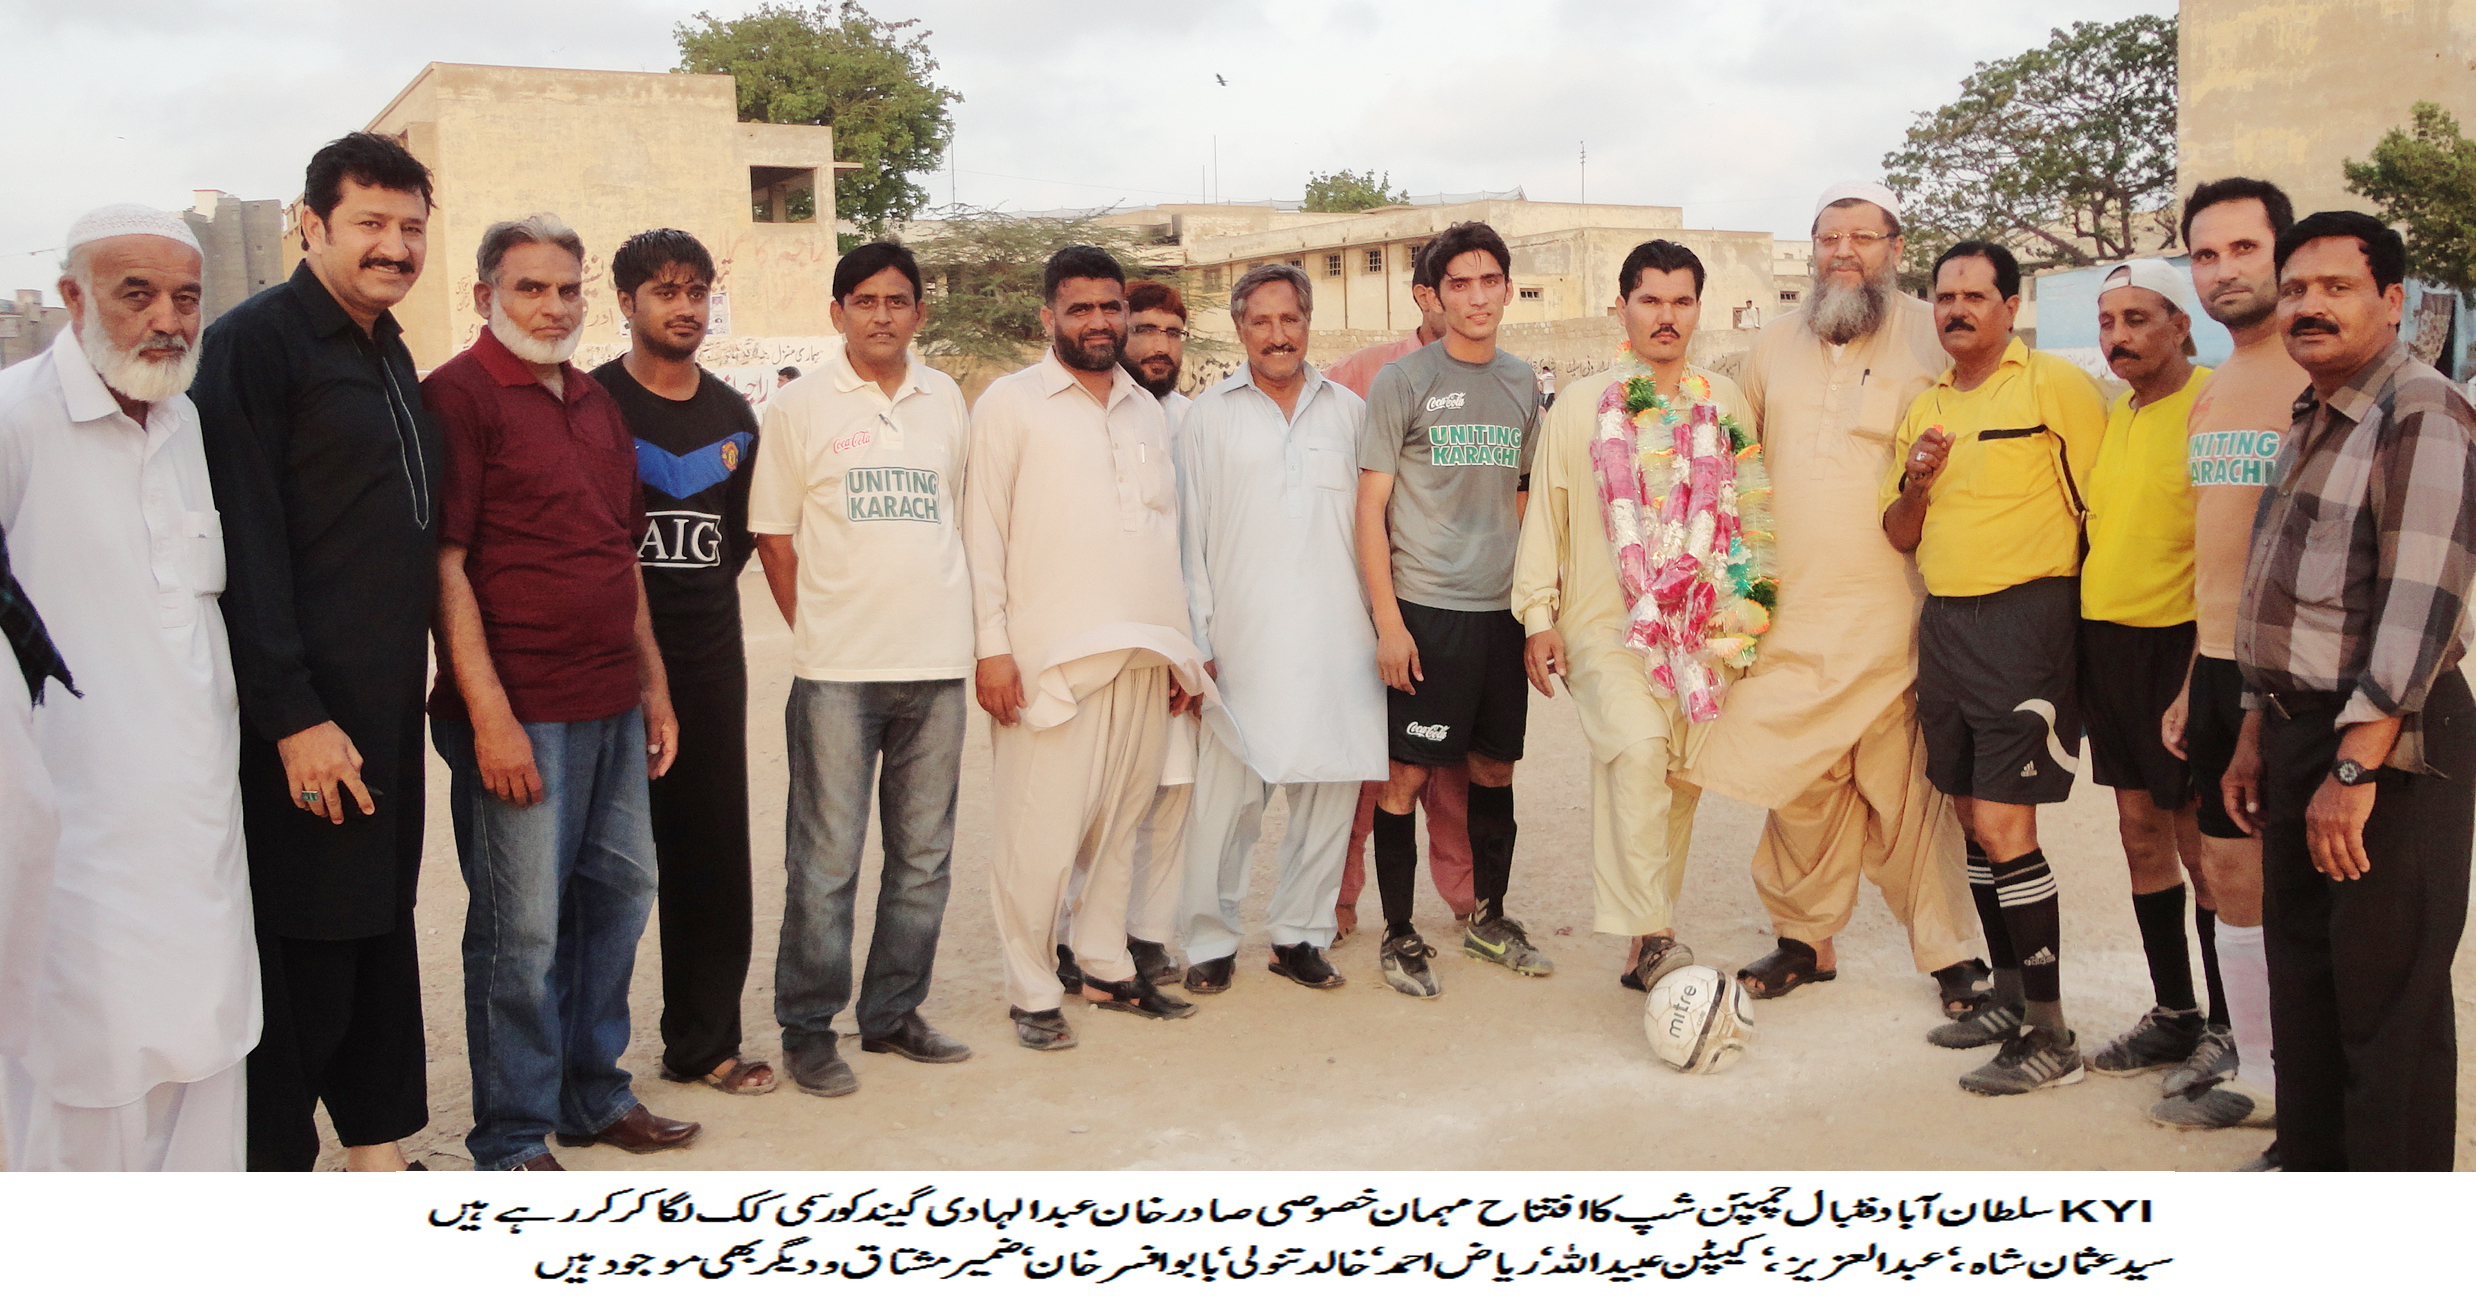 COCA COLA SULTANABAD FOOTBALL CHAMPIONSHIP kicks off in Karachi